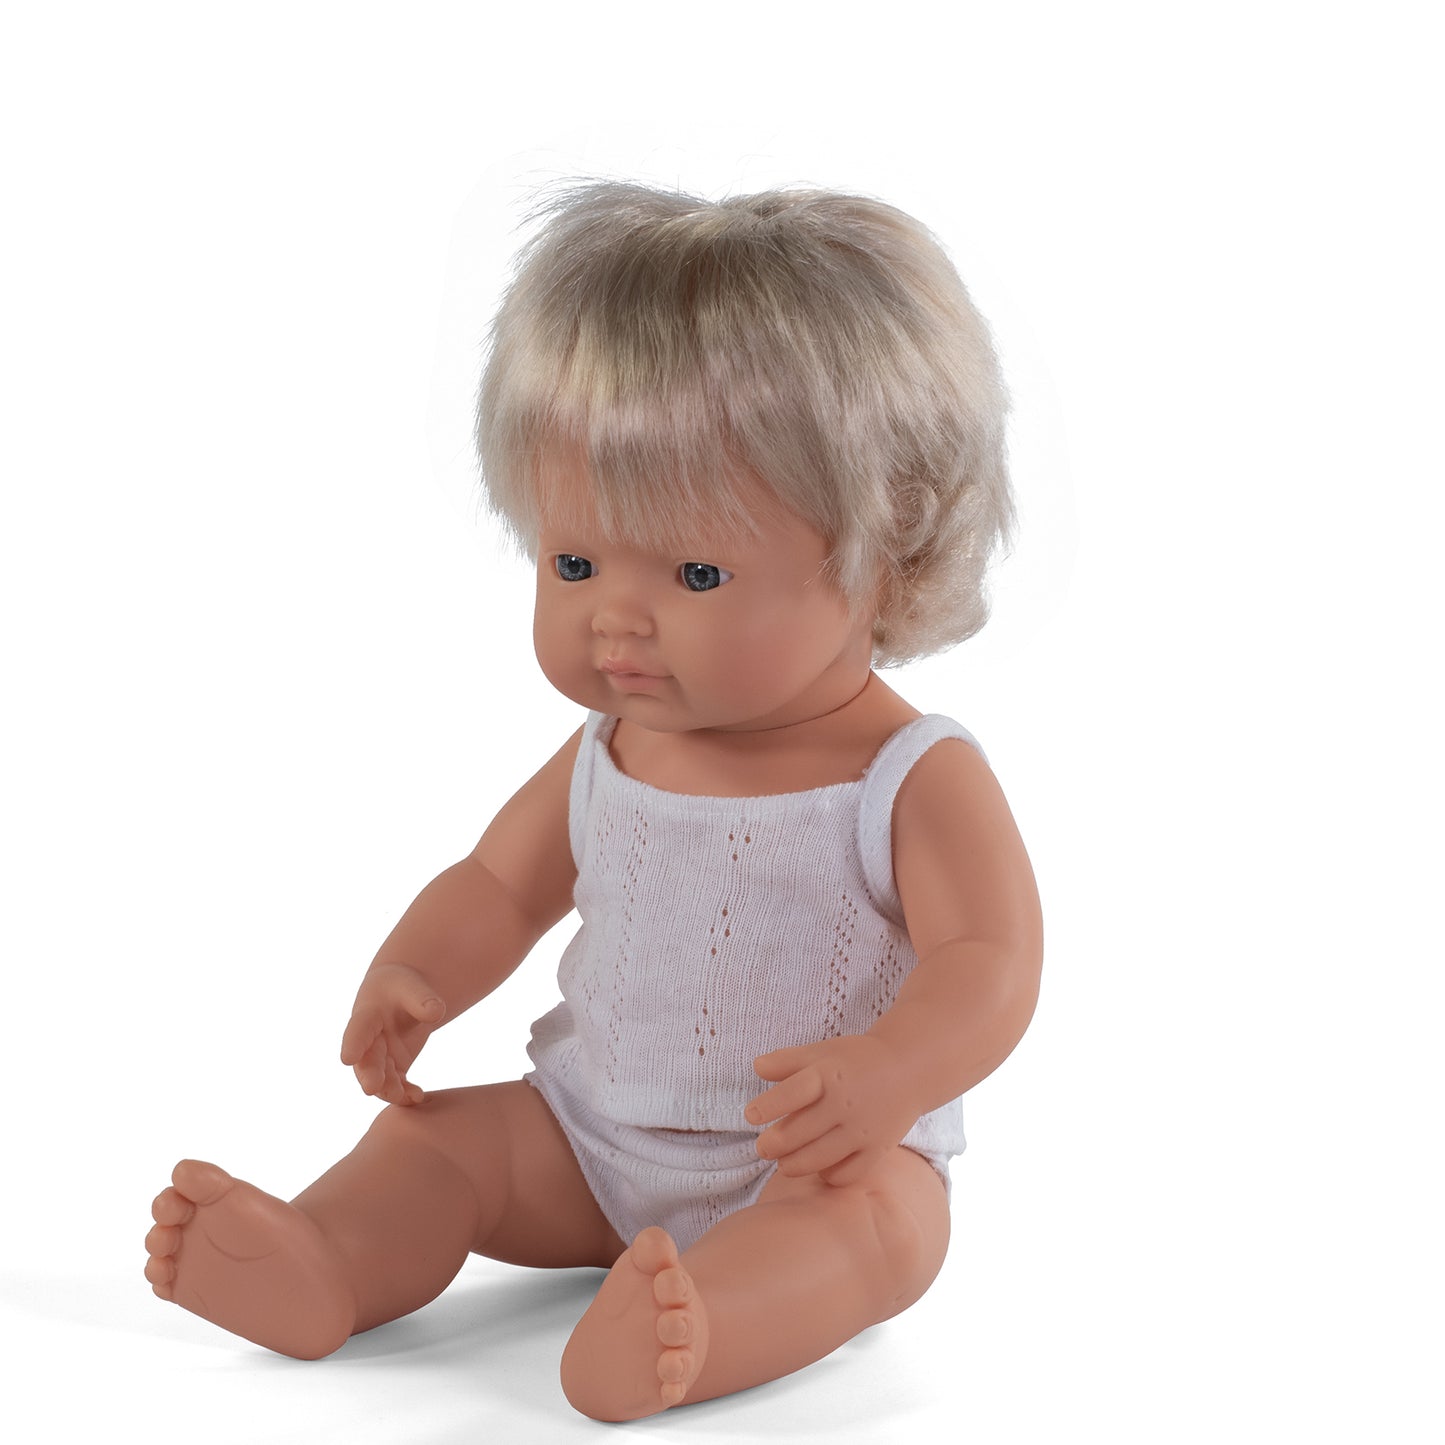 Puppe blond, 38cm, Miniland